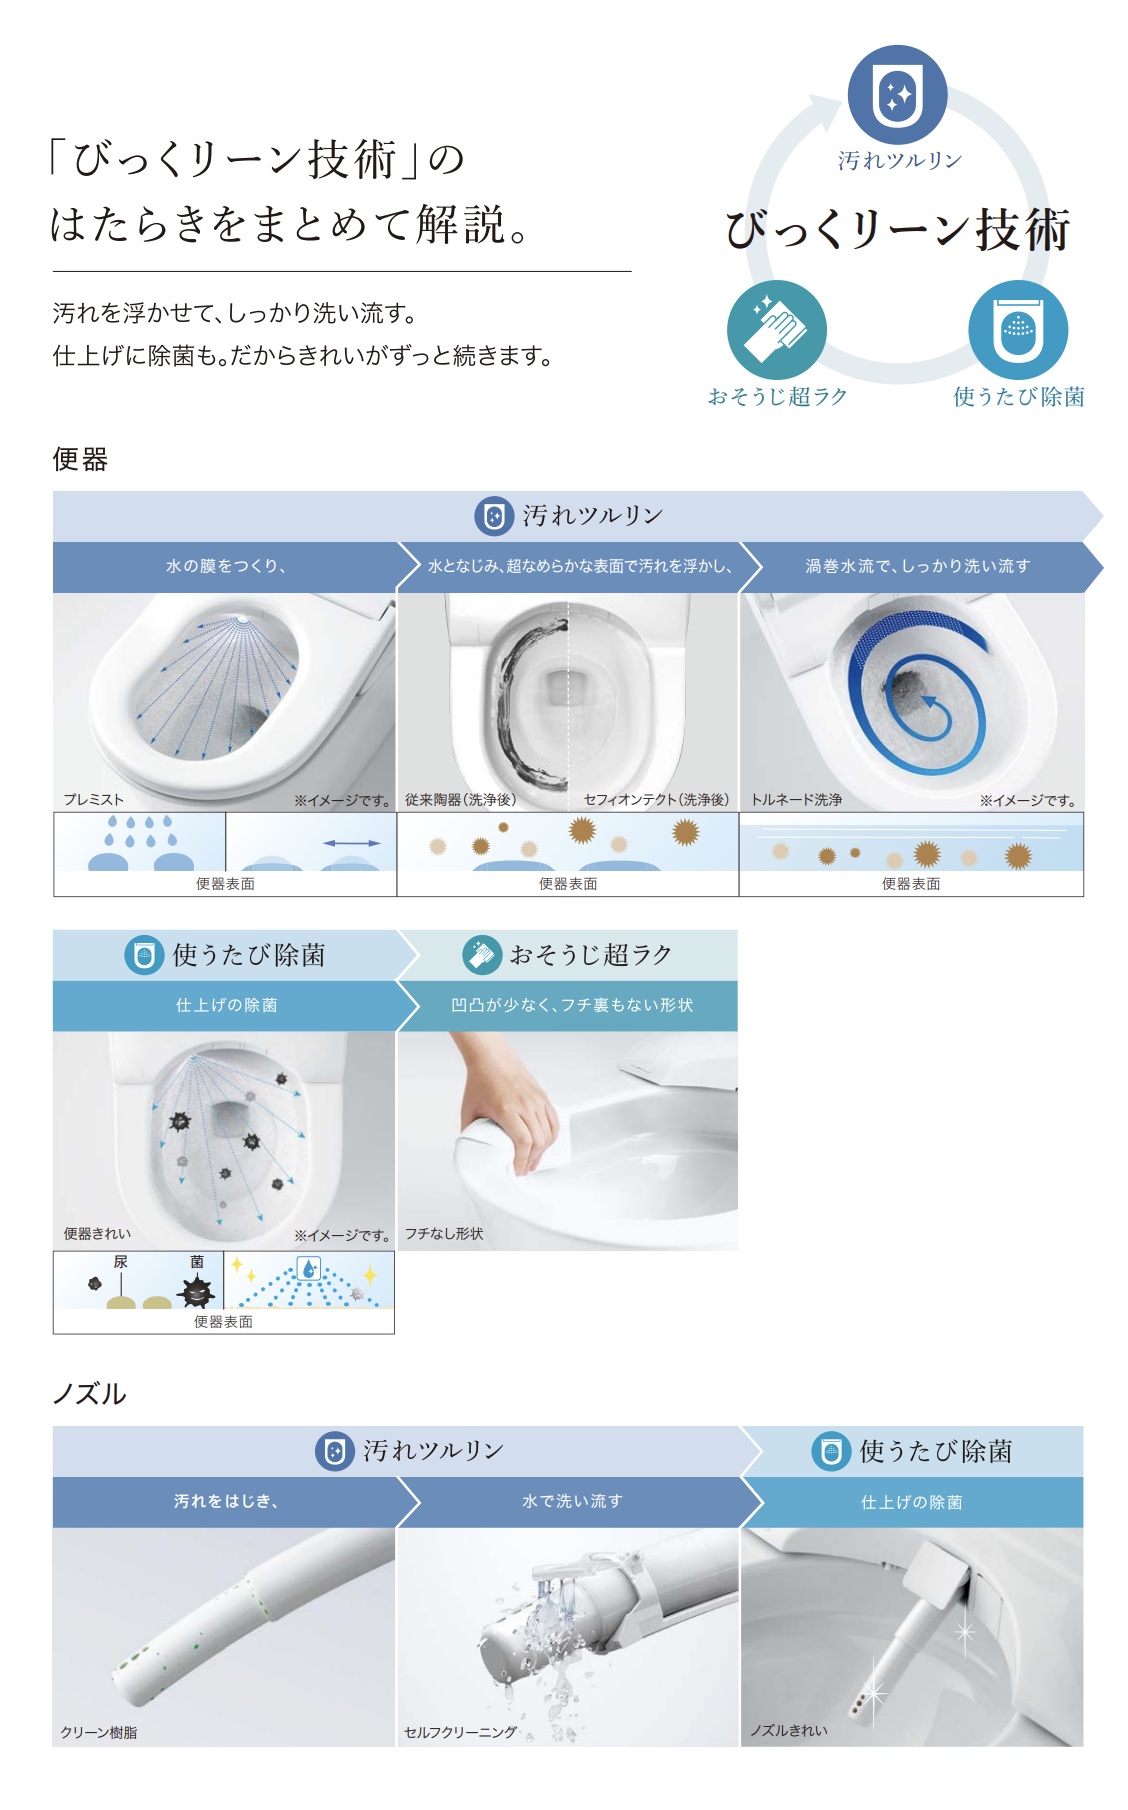 CES9510のトイレきれいの技術